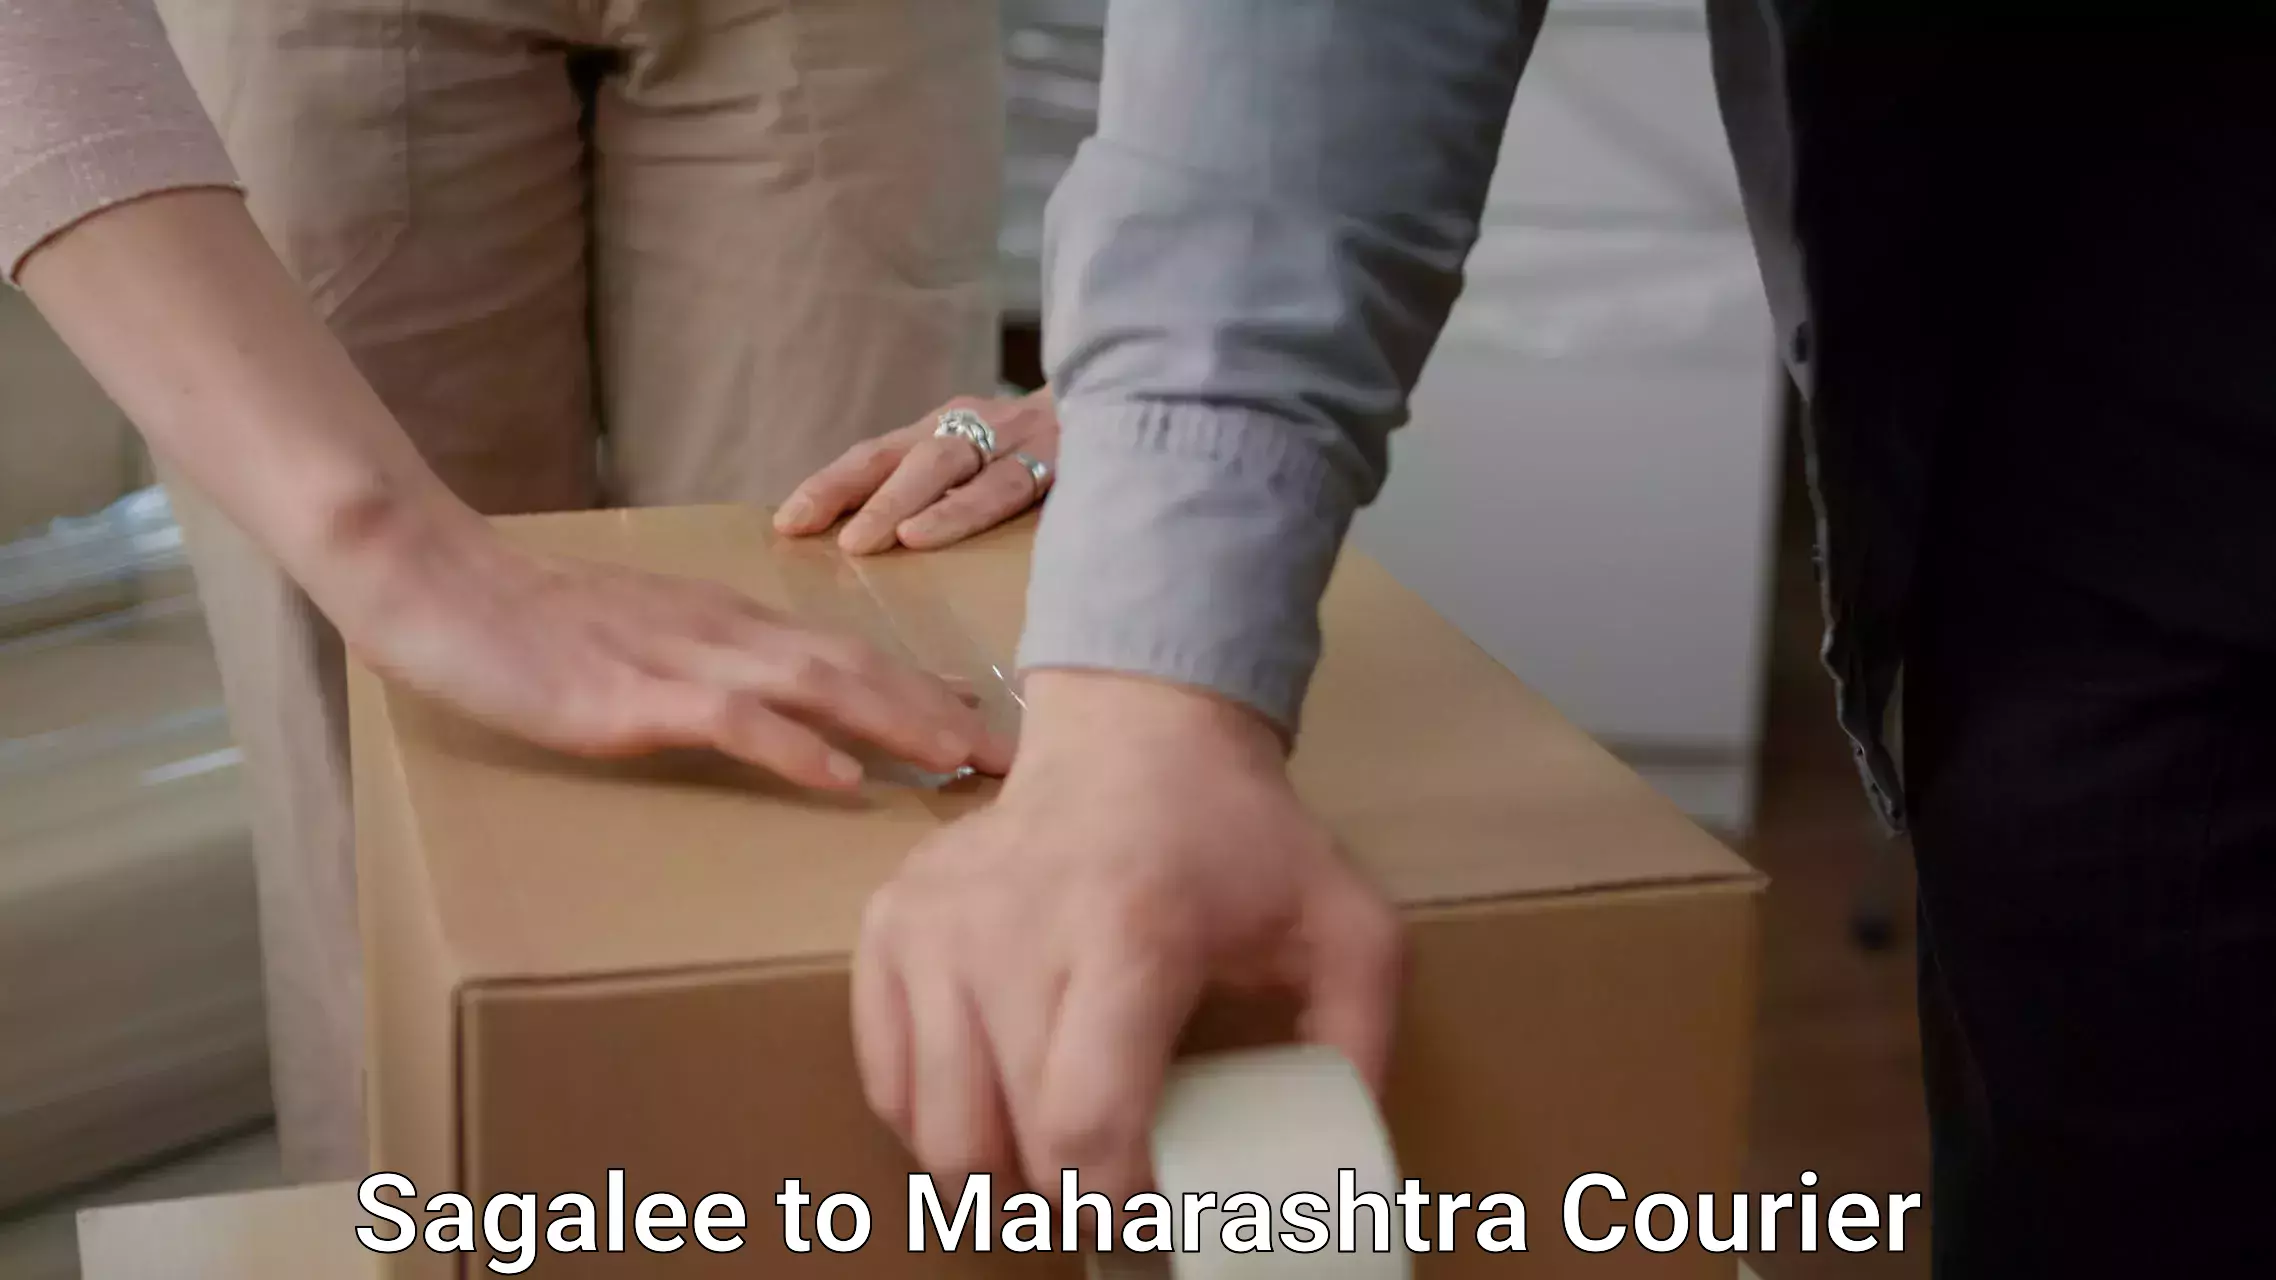 Furniture delivery service Sagalee to Maharashtra